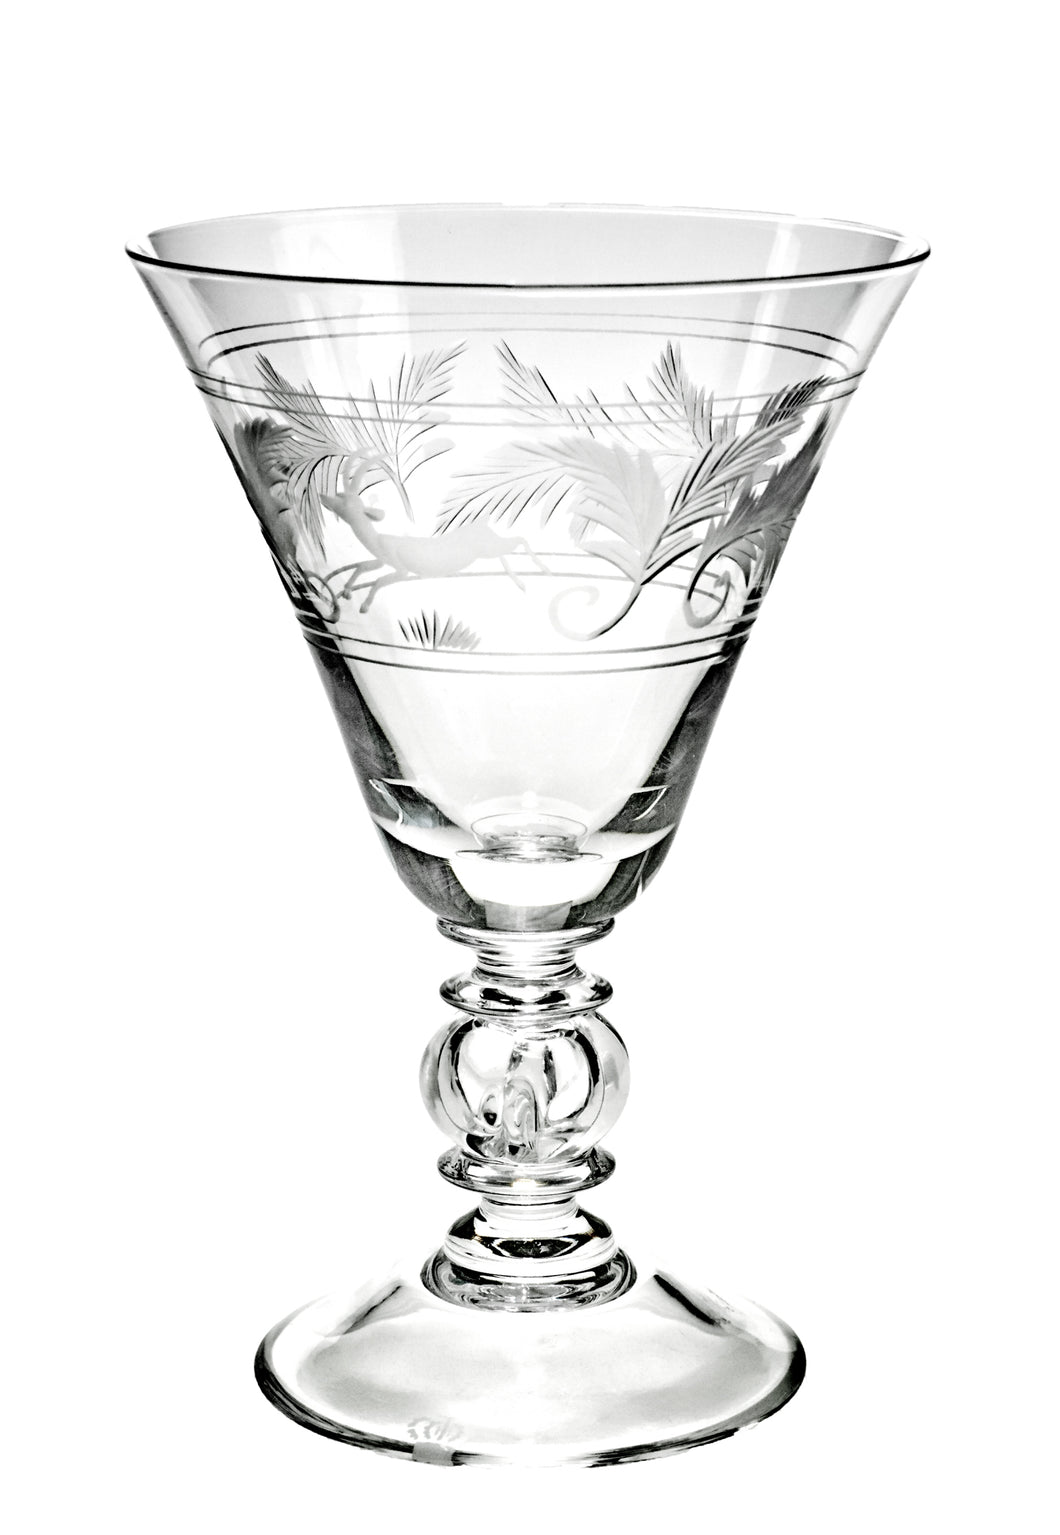 PETERSBURG klar, Gravur 'Springbock' - Weinglas 138 mm (Abverkauf)